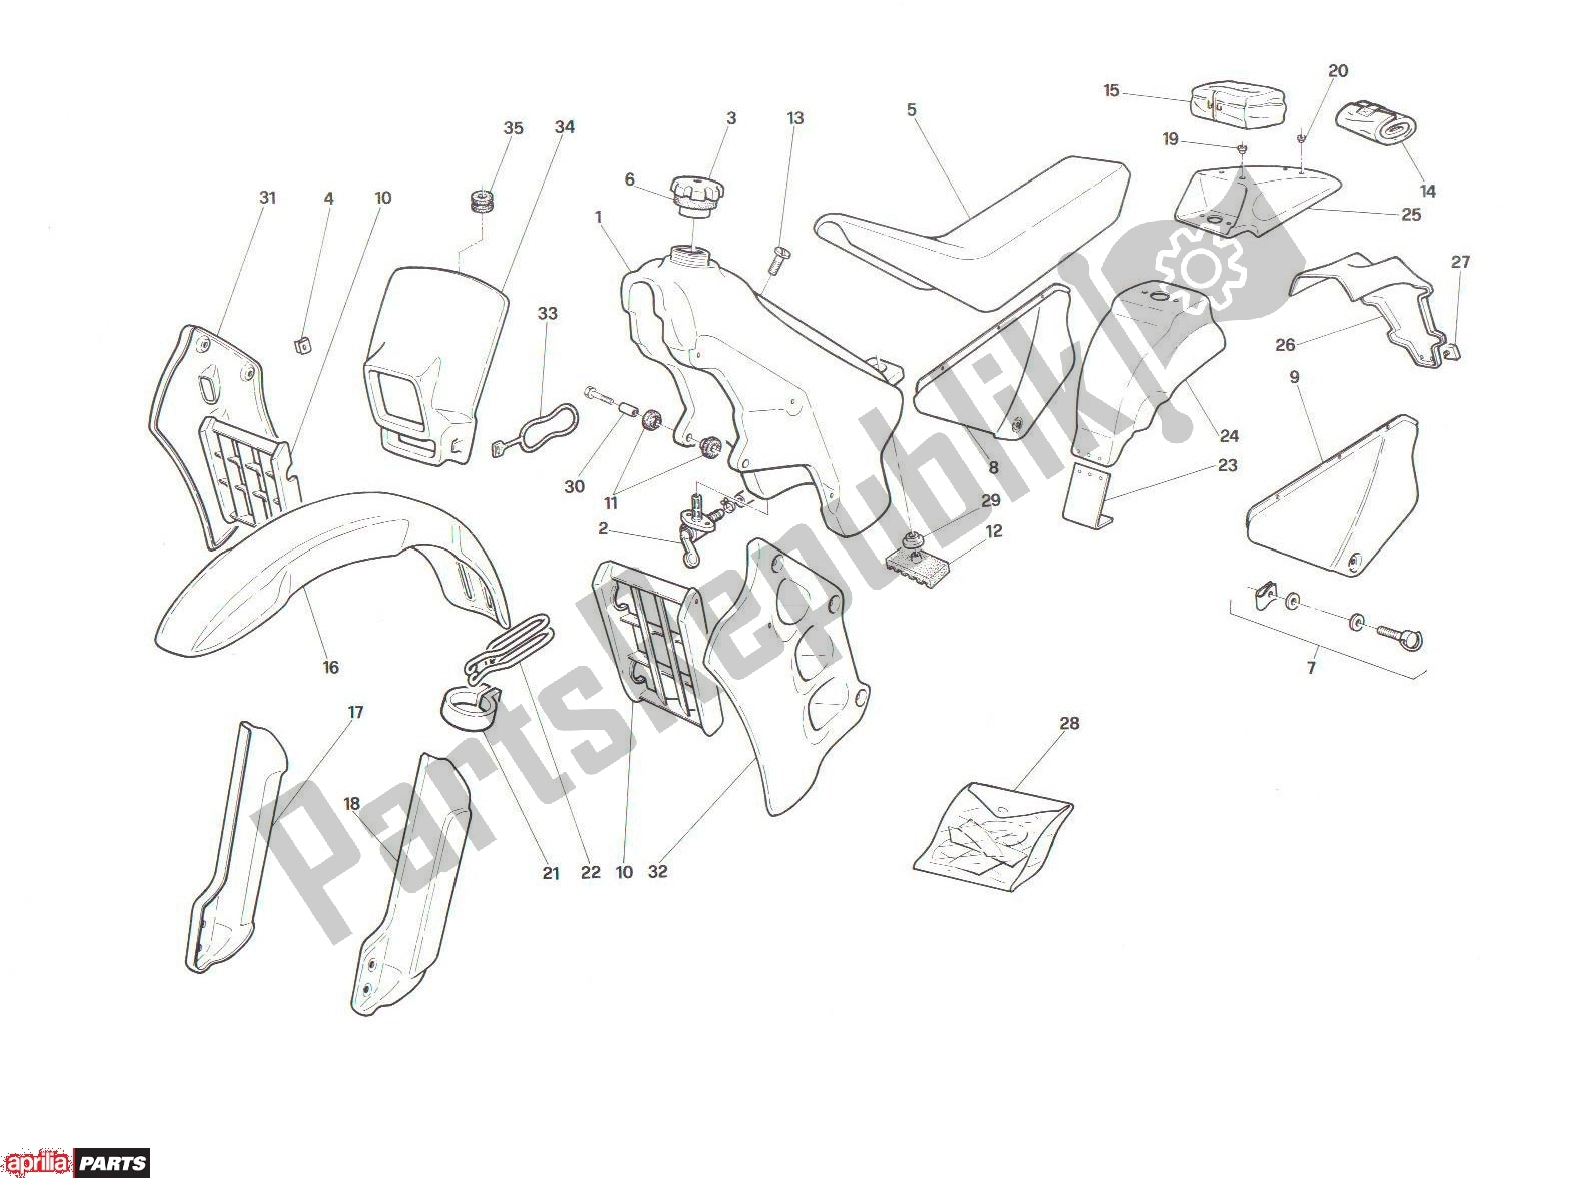 All parts for the Body of the Aprilia RX 101 125 1989